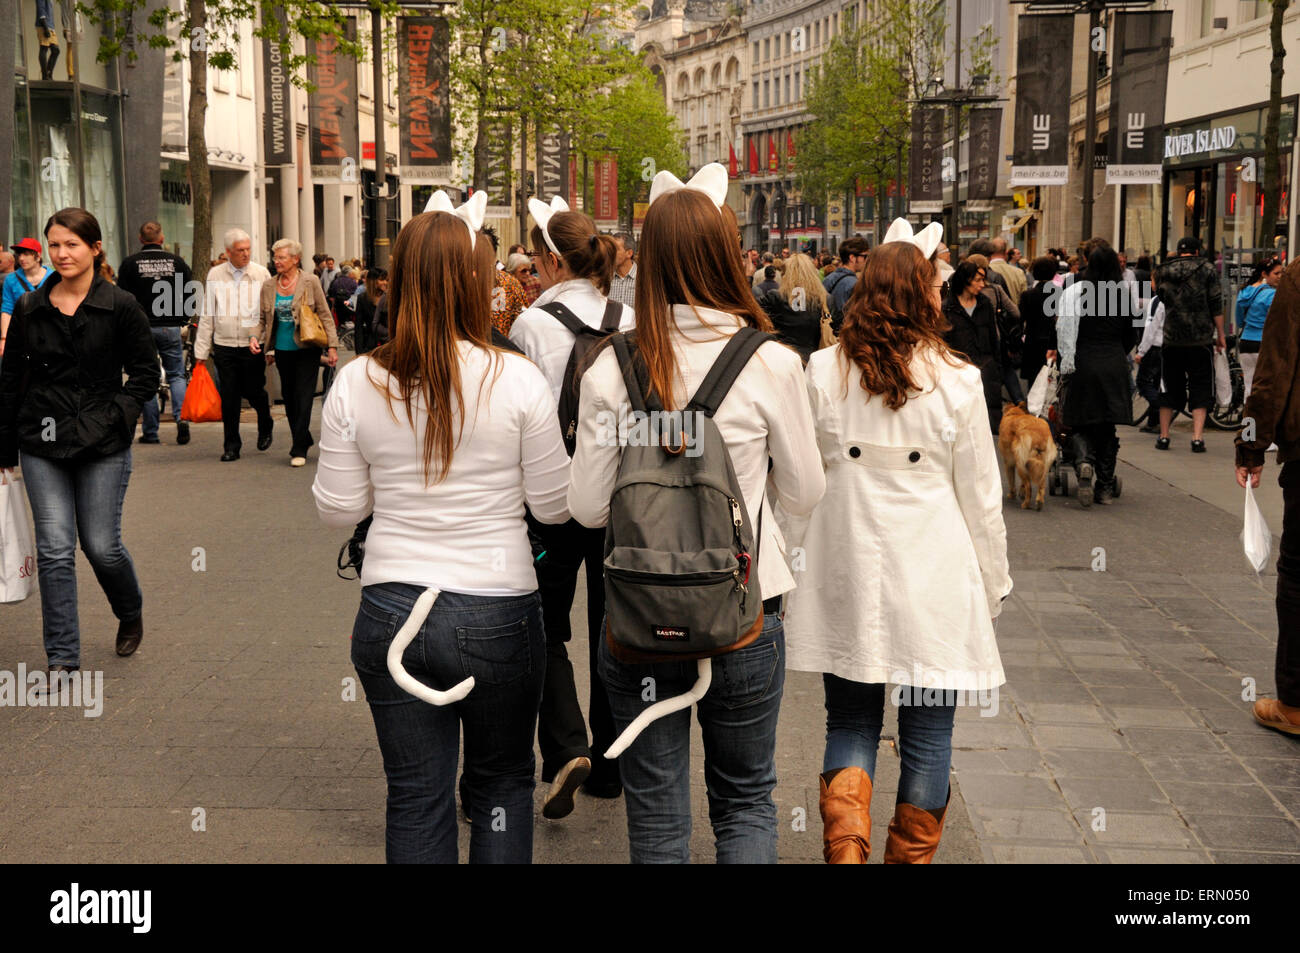 Antwerp / Antwerpen, Belgium. Girls in costume before a night out Stock Photo